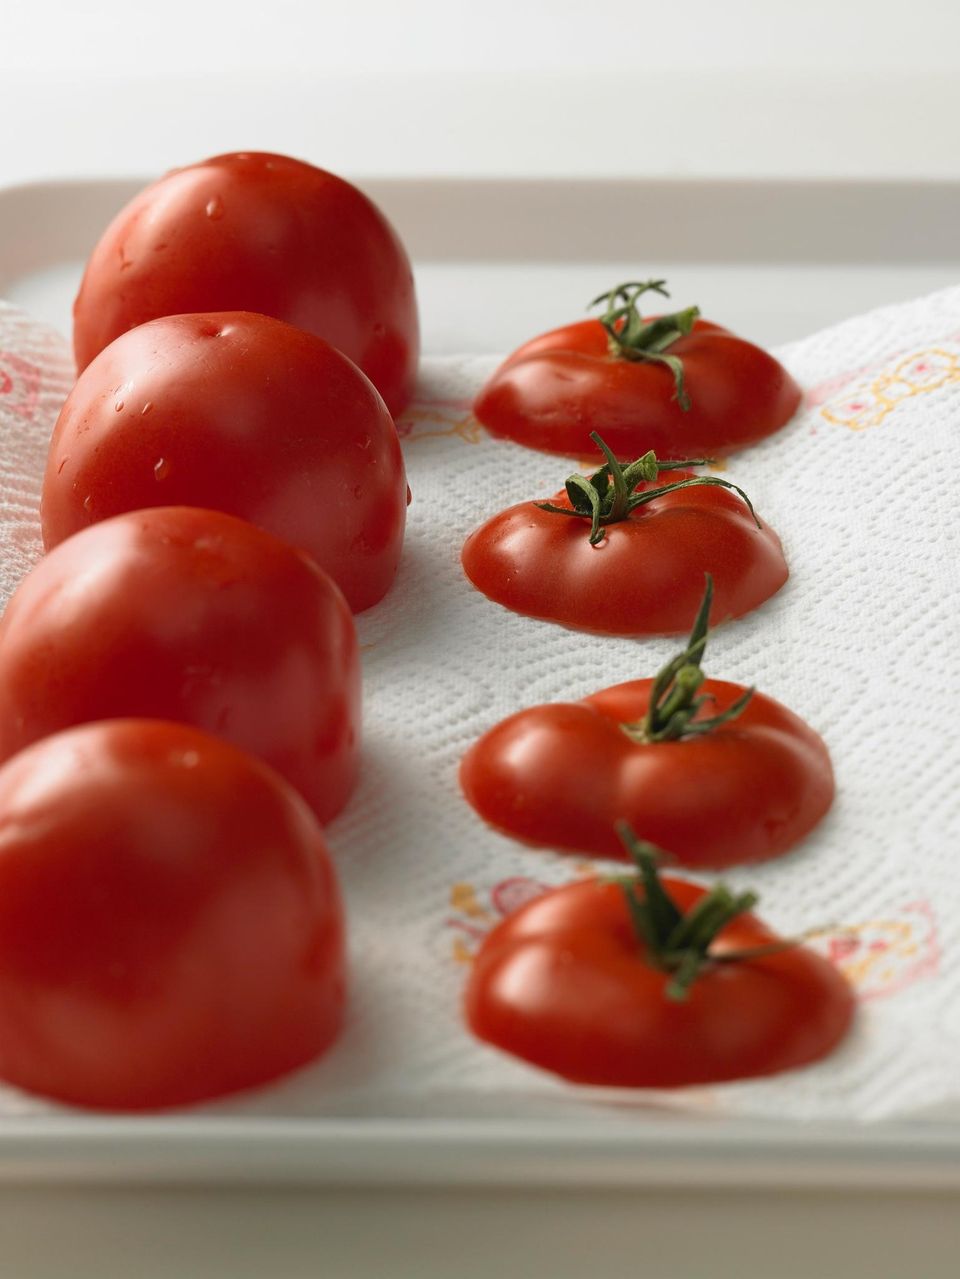 Tomaten abtropfen lassen